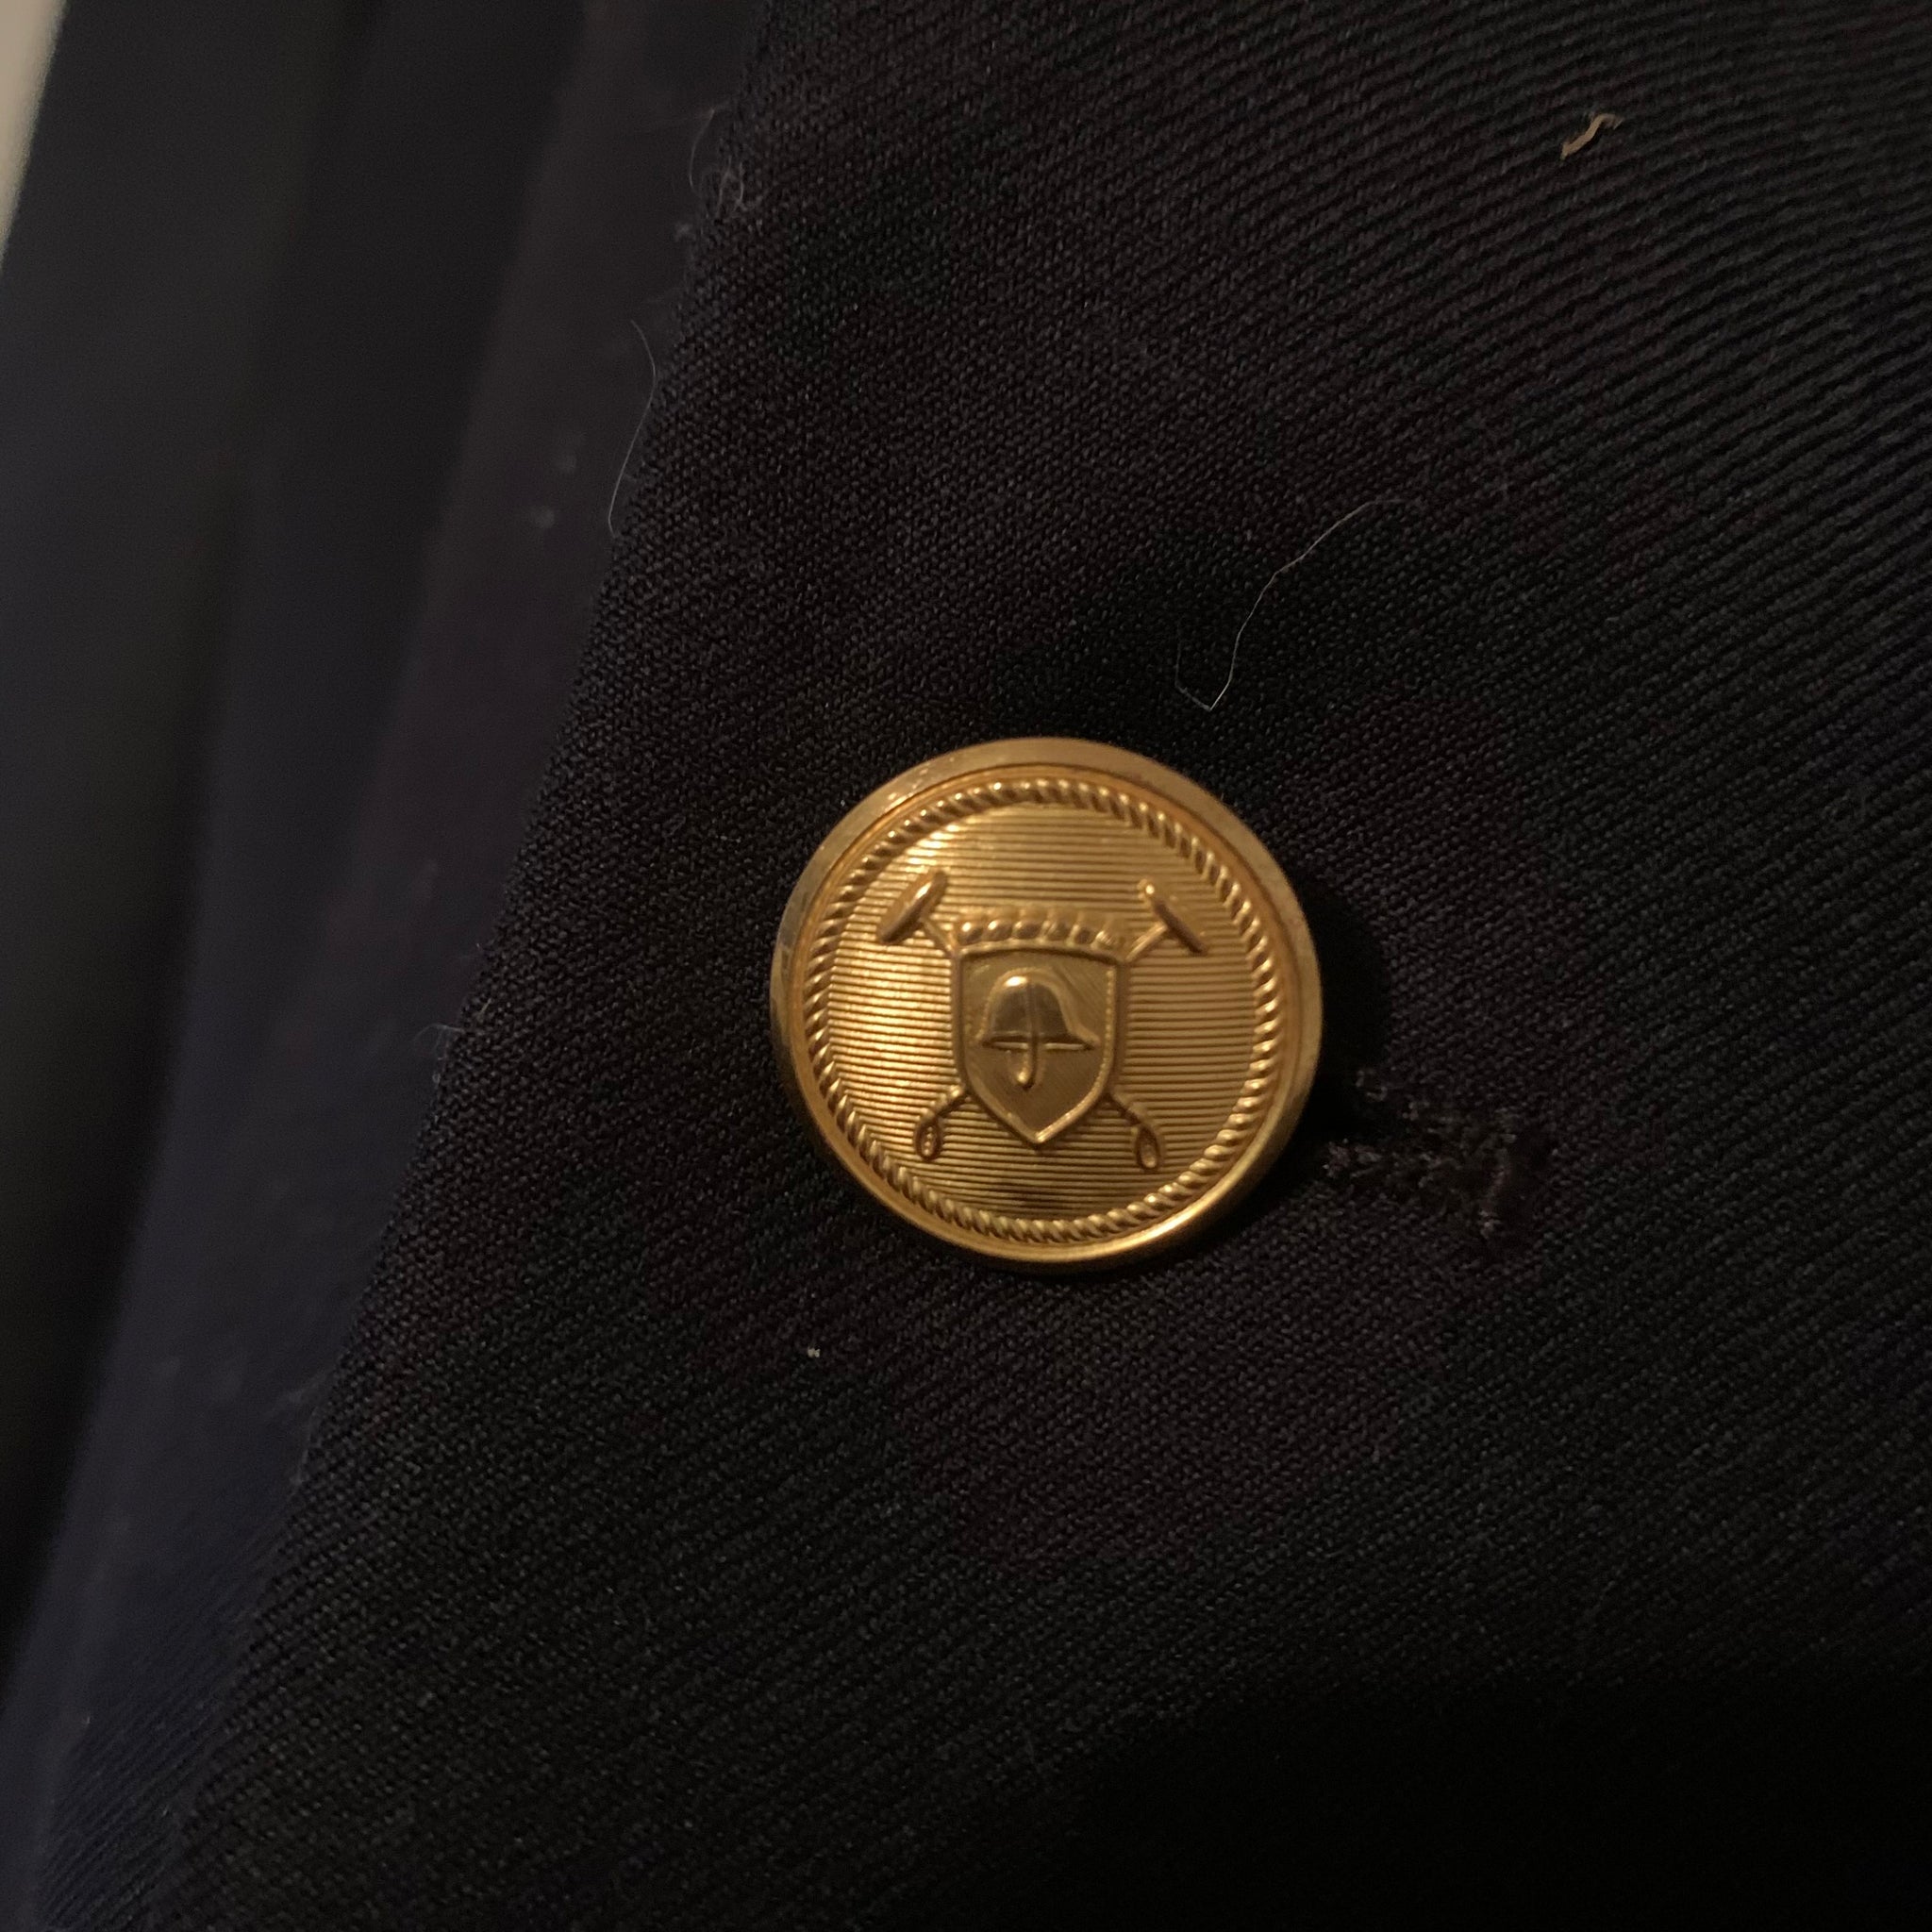 Navy Ralph Lauren Gold Button Wool Blazer (M-XL)